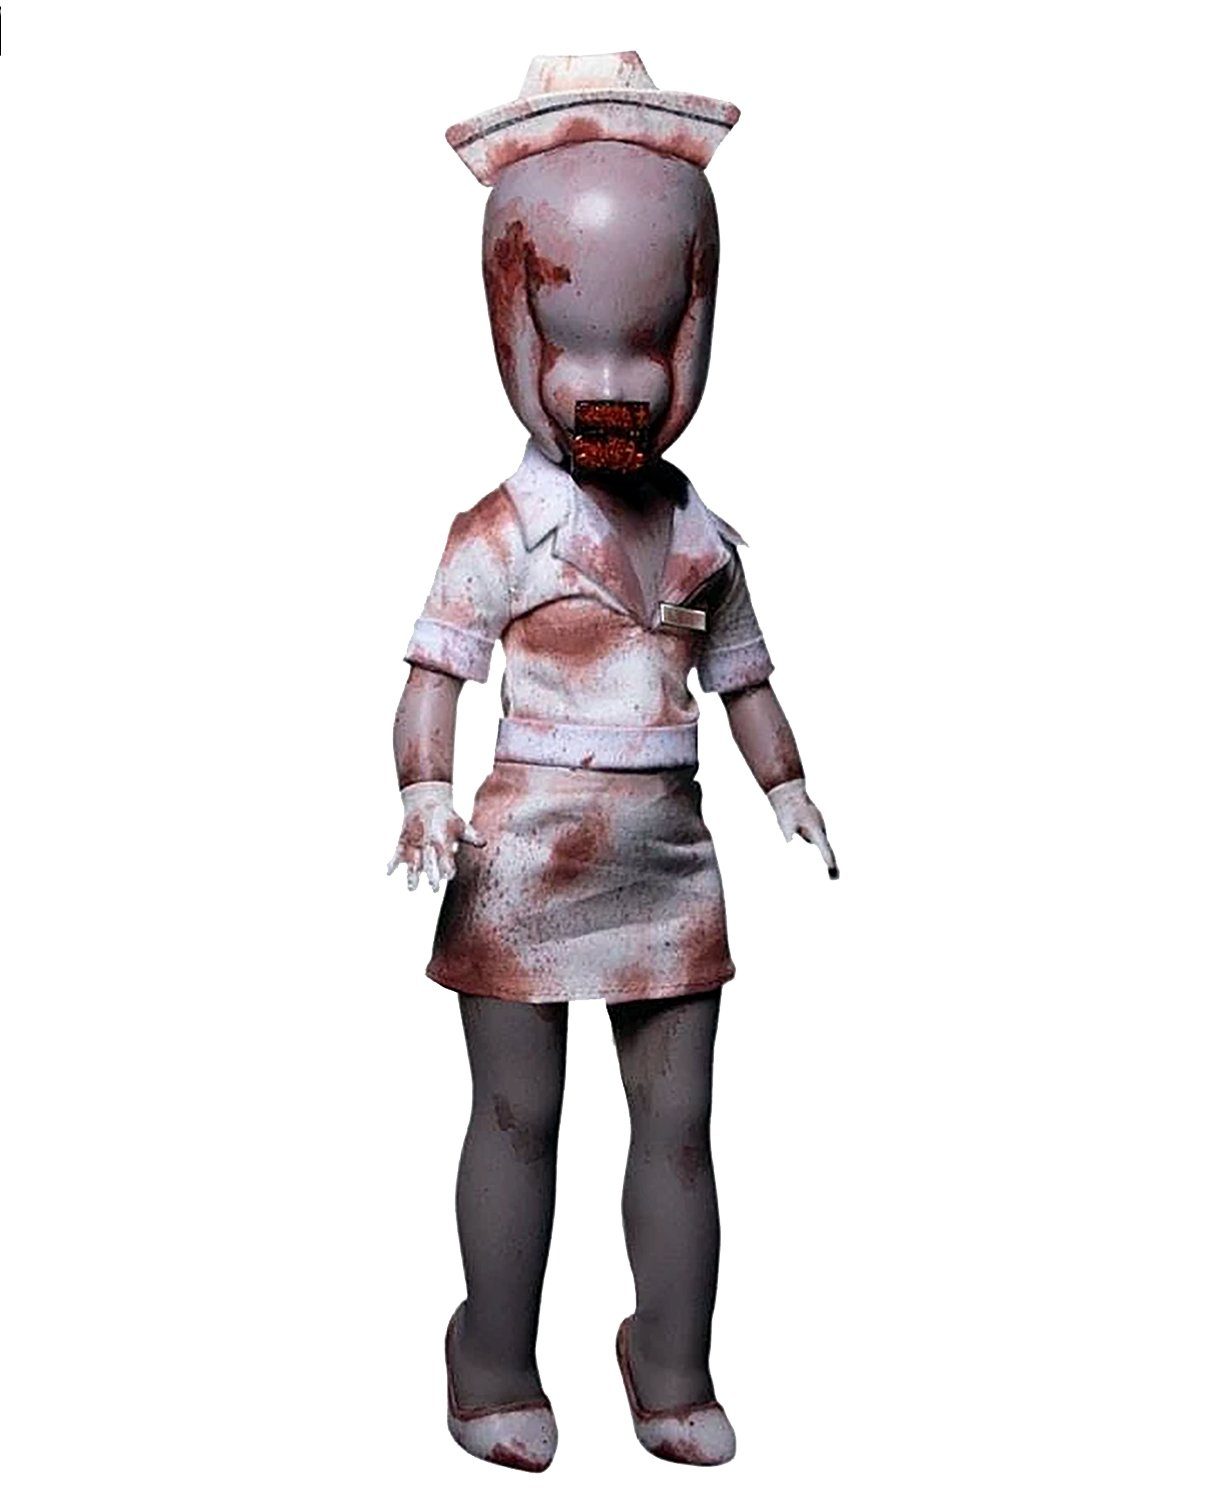 MEZCO Actionfigur LDD presents Silent Hill 2 Bubble Head Nurse Puppe